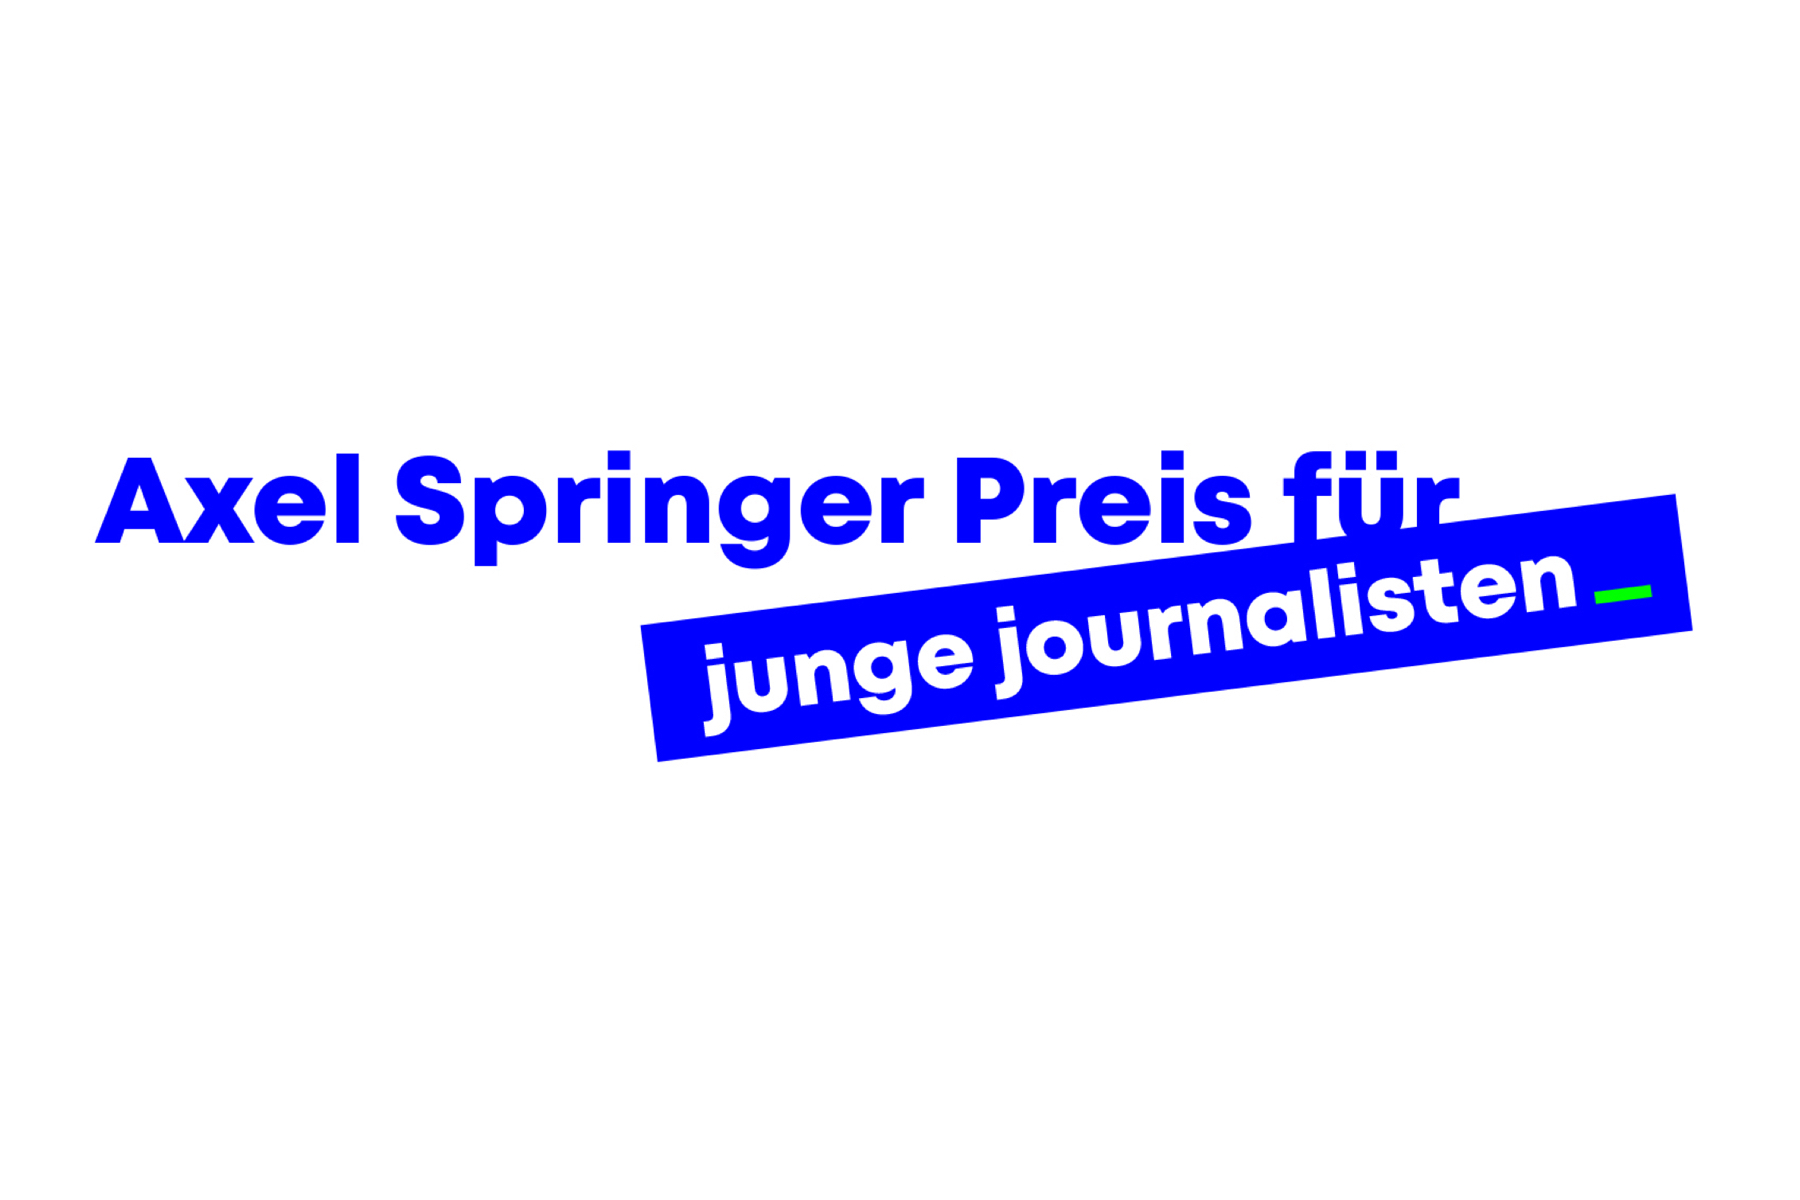 Kuratorium Axel Springer Preis Axel Springer Preis